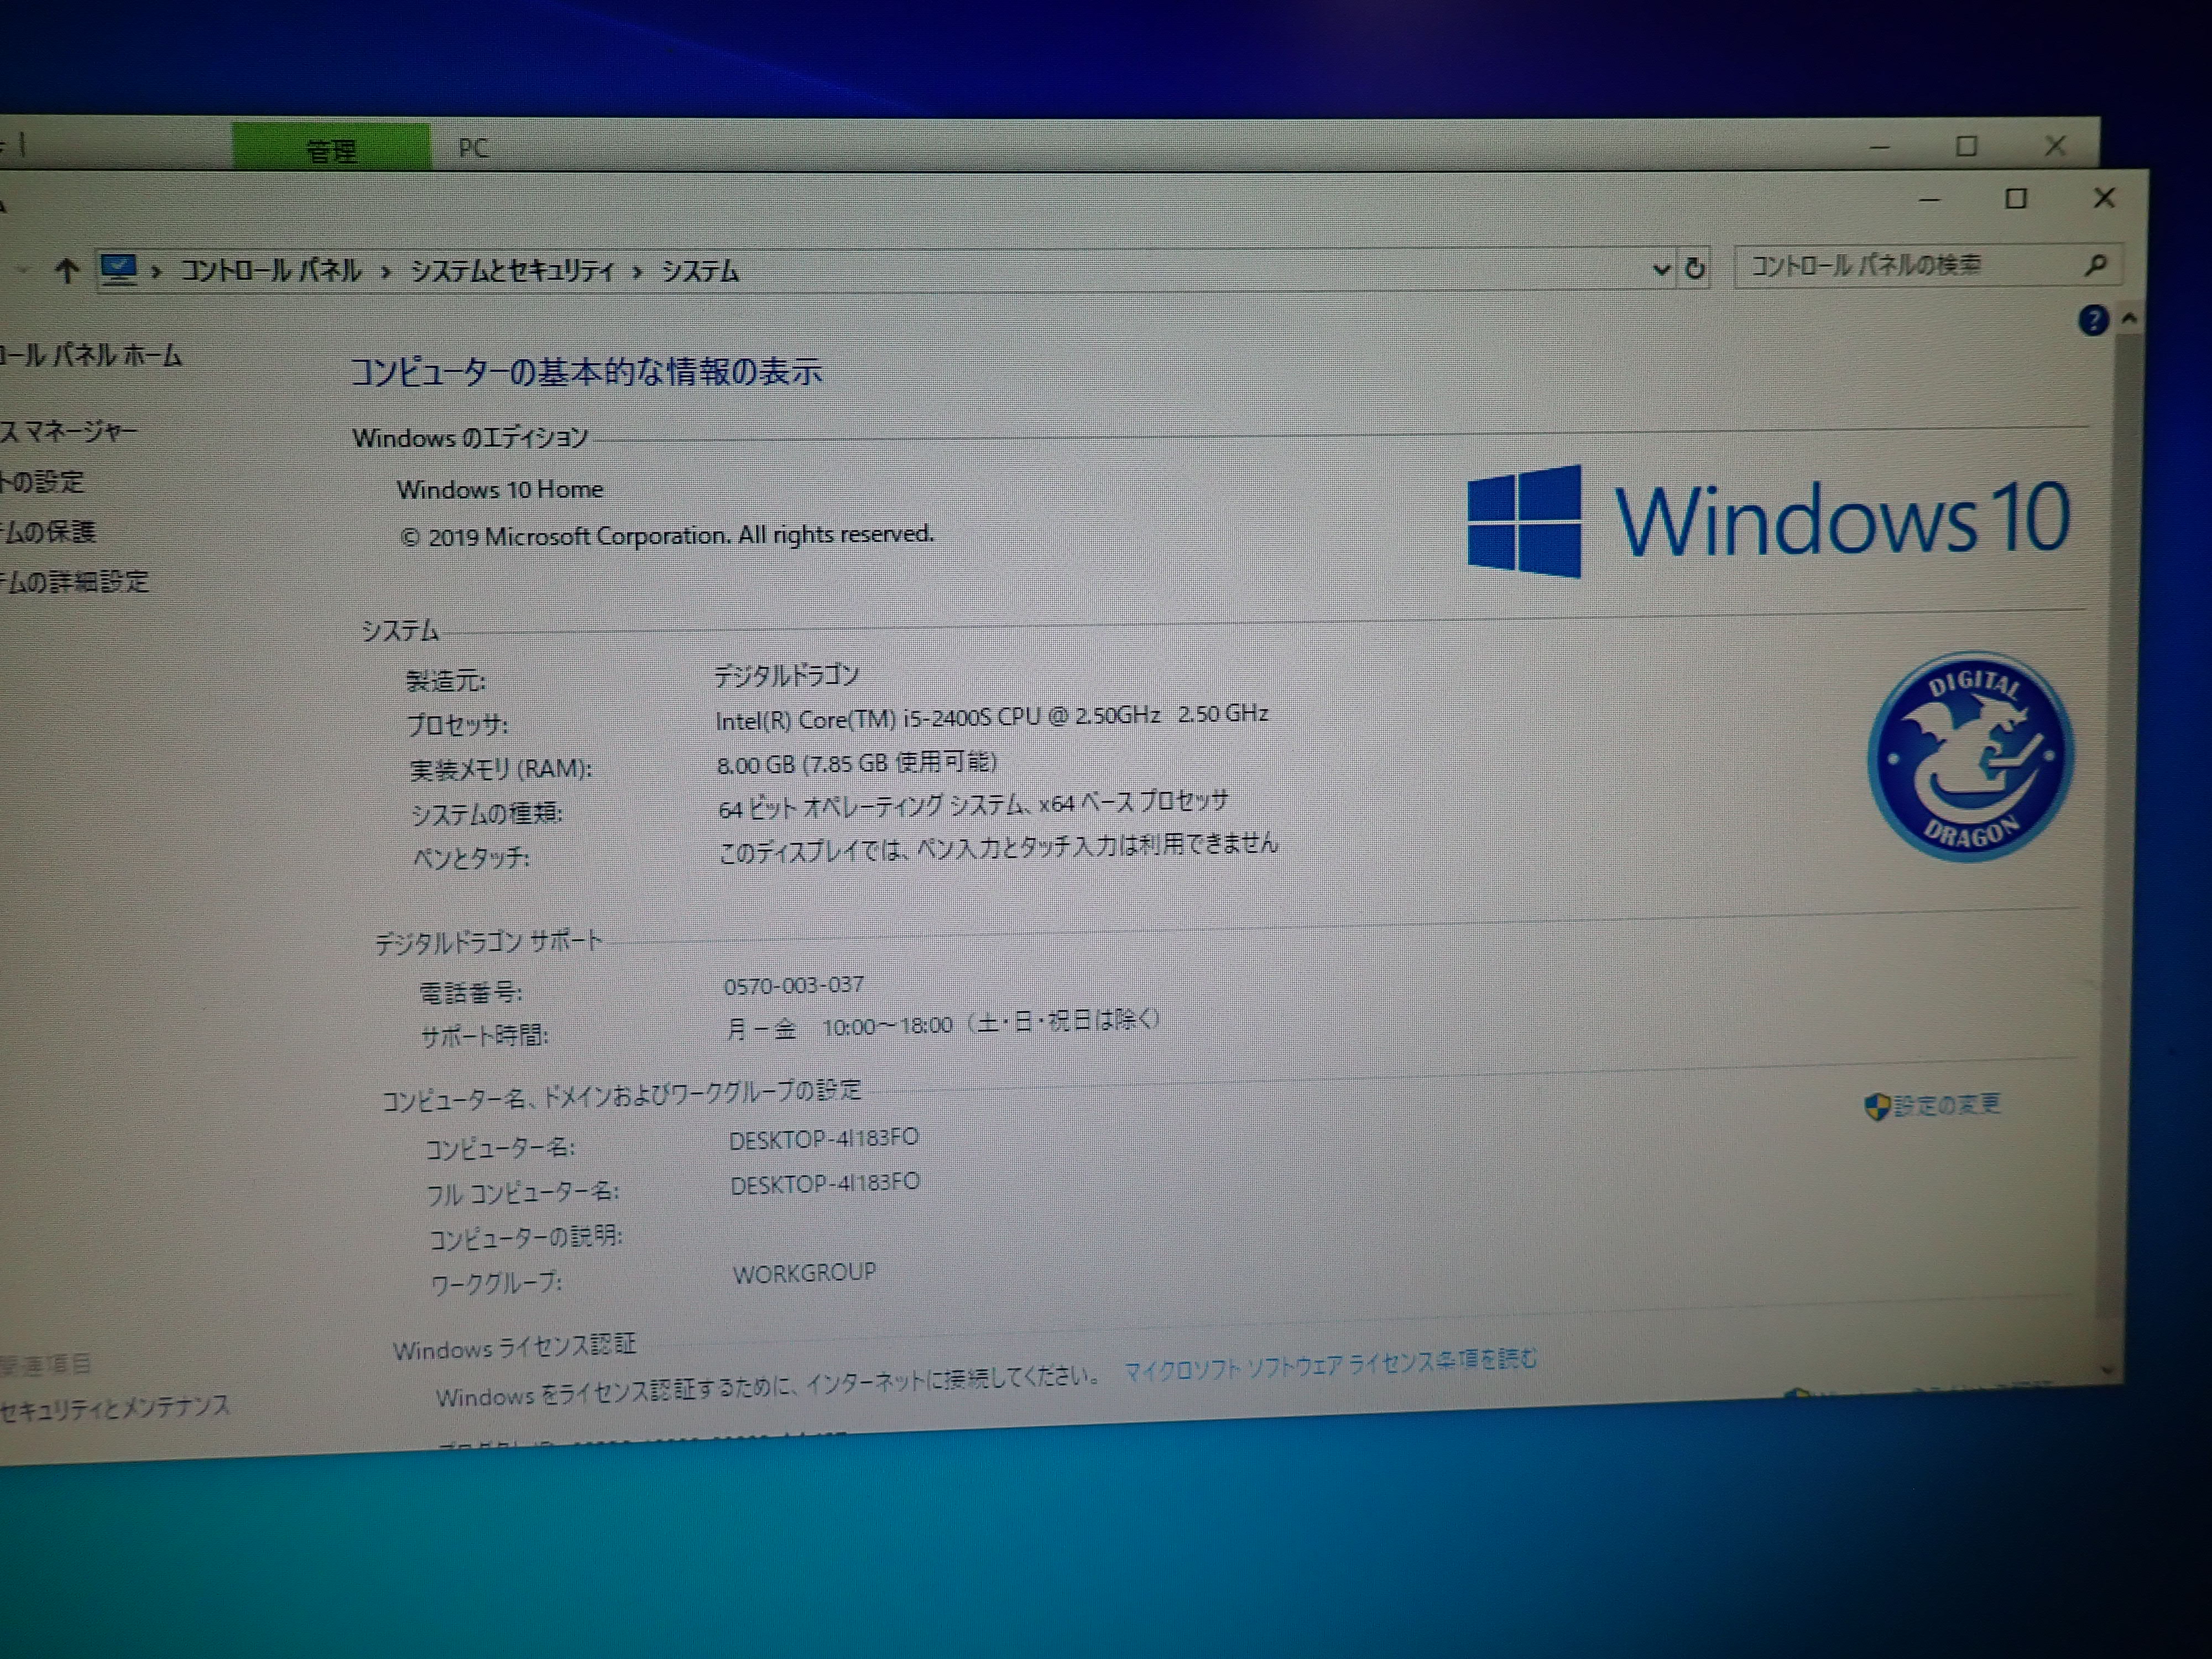 Windows10 Home 64bit Core i5-2400S 2.50GHz RAM8GB HDD500GB DVDドライブ